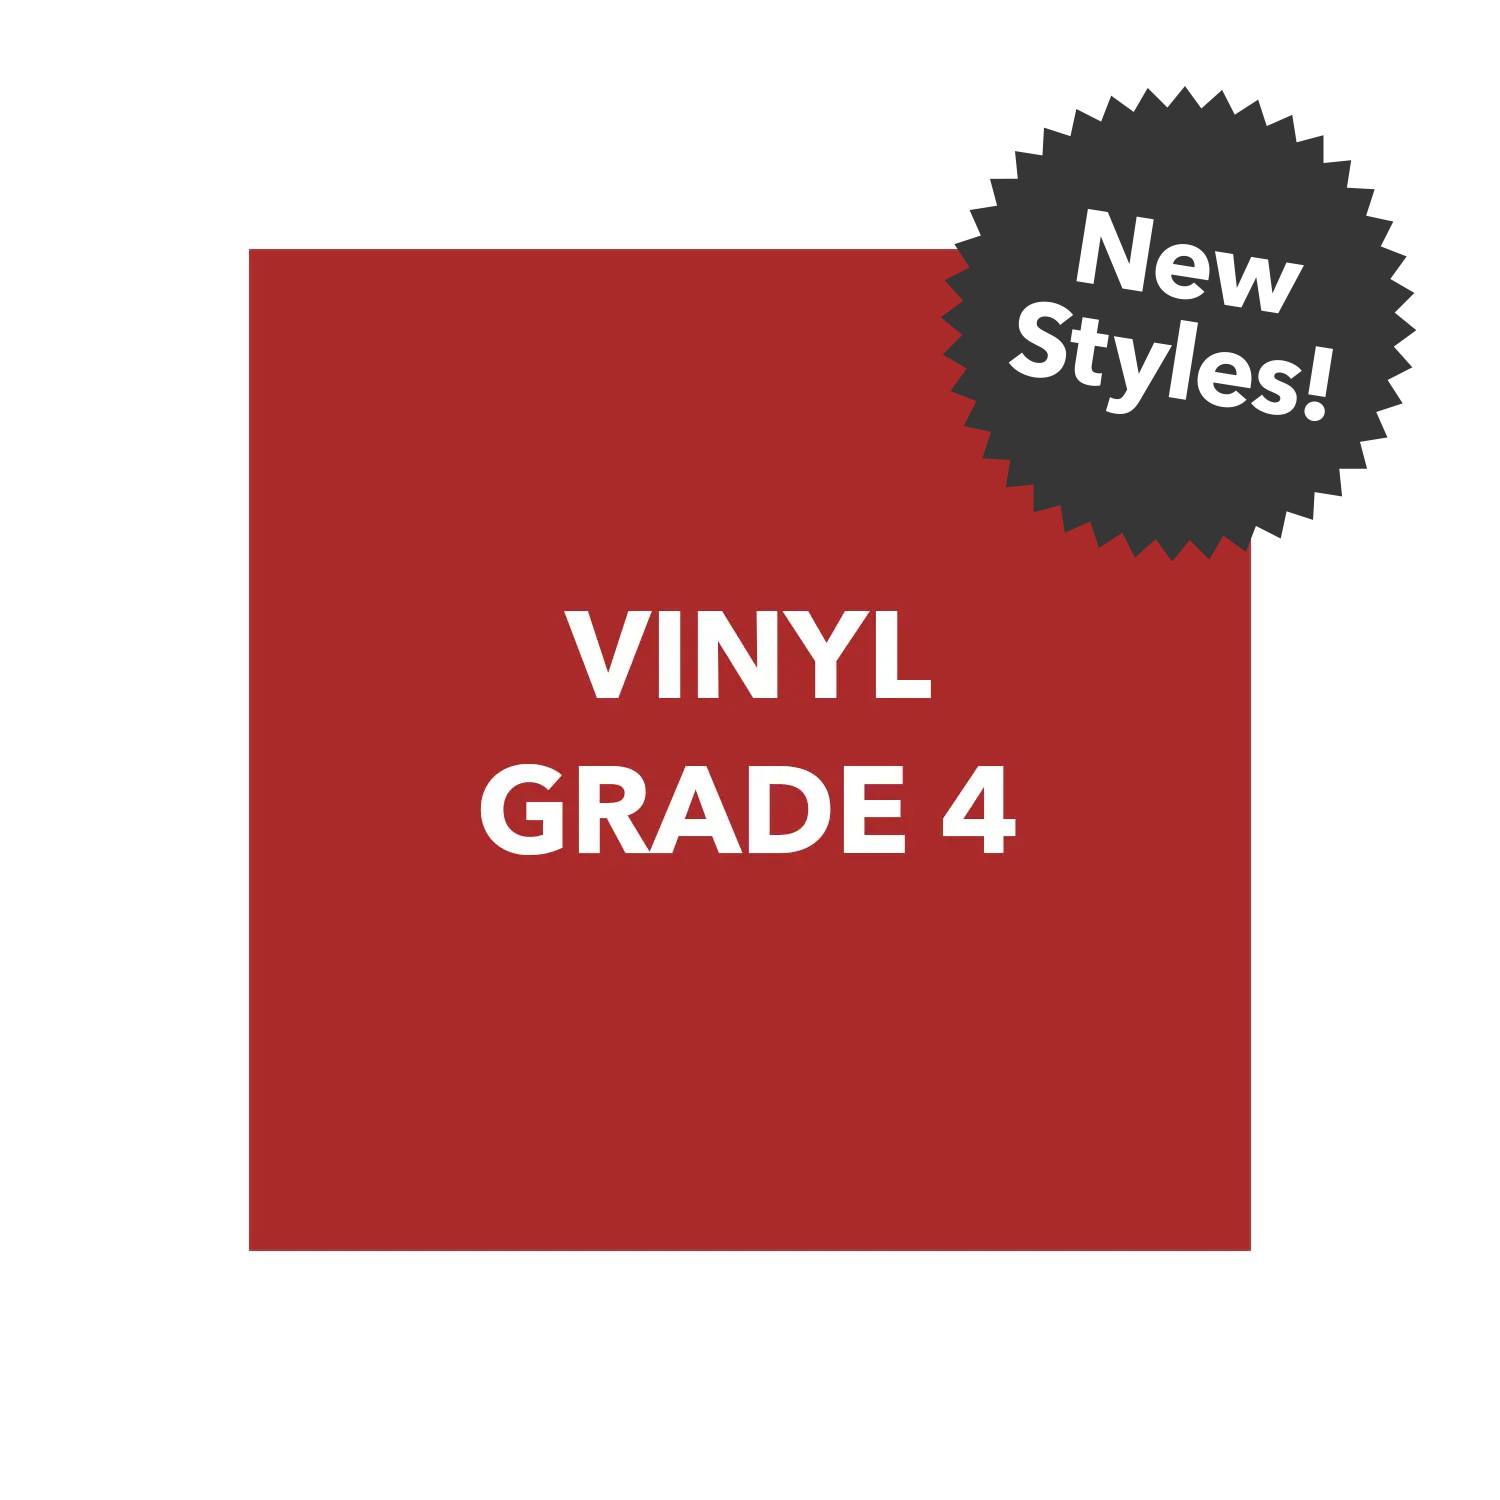 Vinyl Grade 4 - New Styles